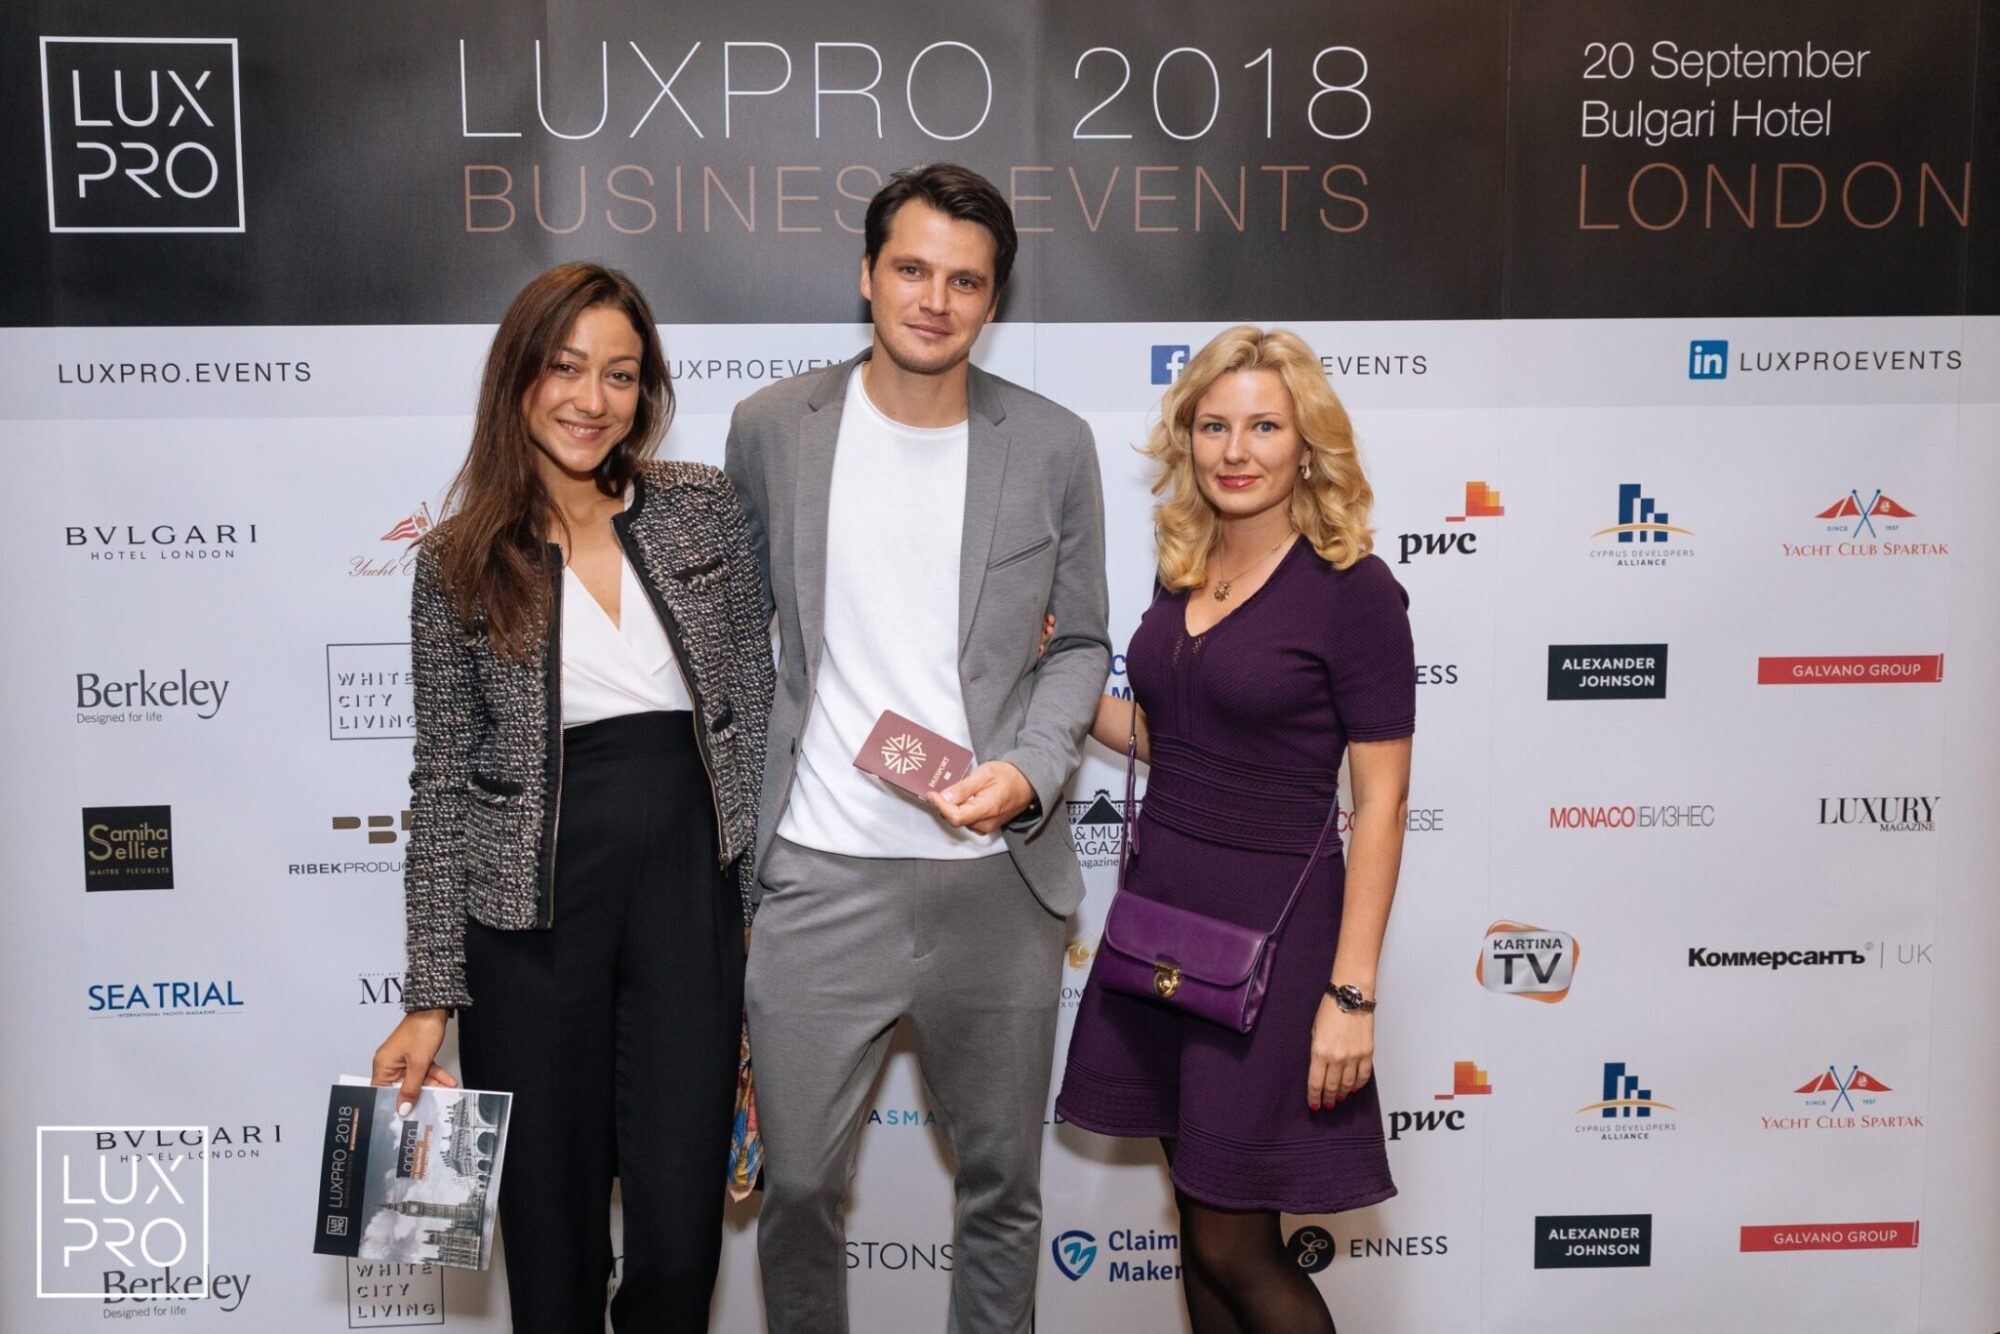 Luxpro_London_Buvgari